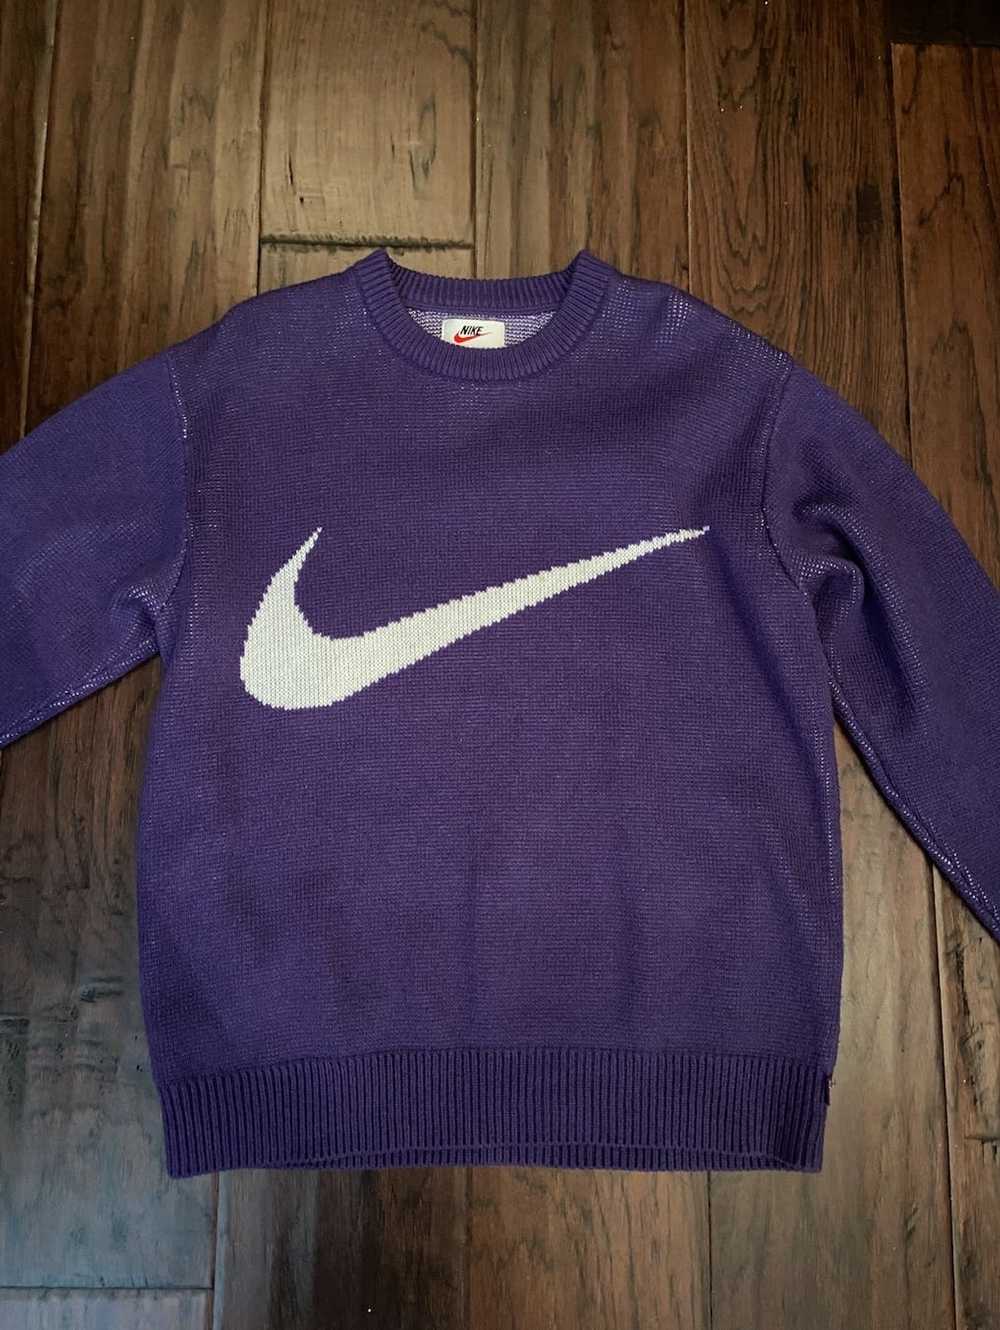 Nike × Supreme Nike Supreme Swoosh Sweater - Gem